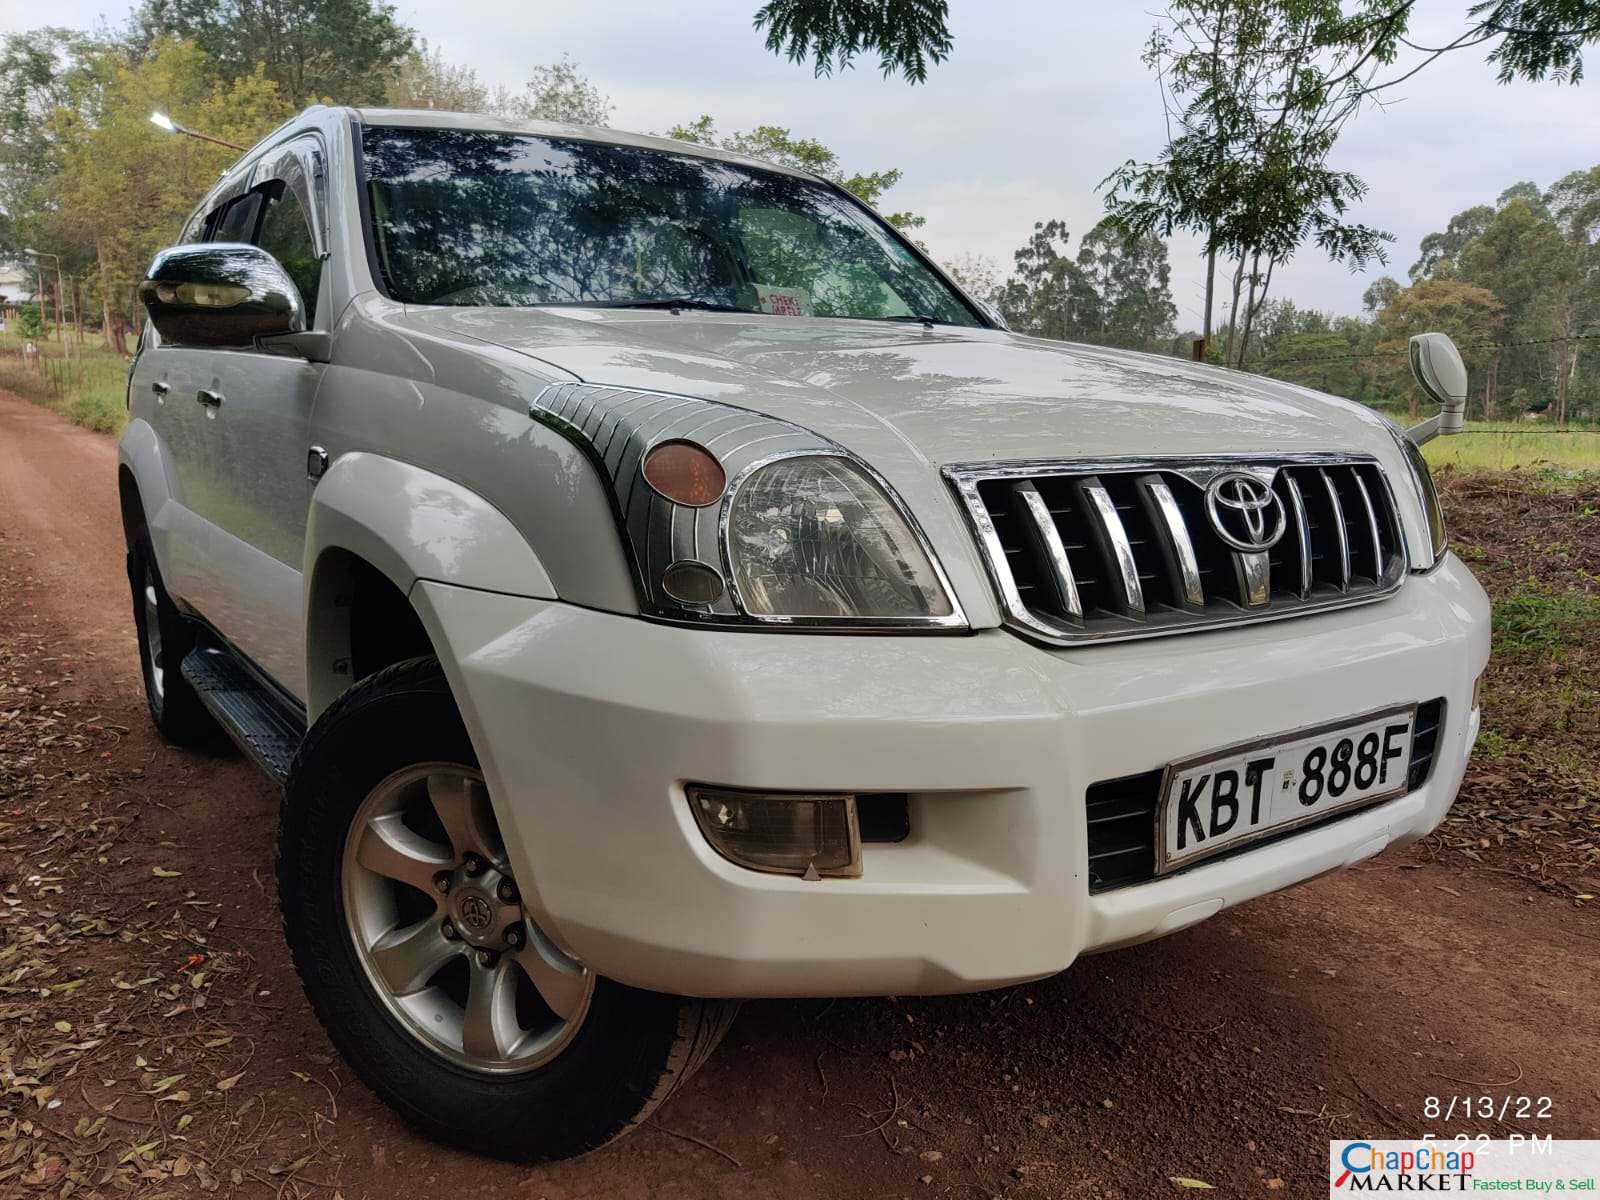 Cars Cars For Sale-Toyota Prado J120 Kenya 🔥 You Pay 40% Deposit Trade in OK EXCLUSIVE Toyota Prado j120 for sale in kenya hire purchase installments 6